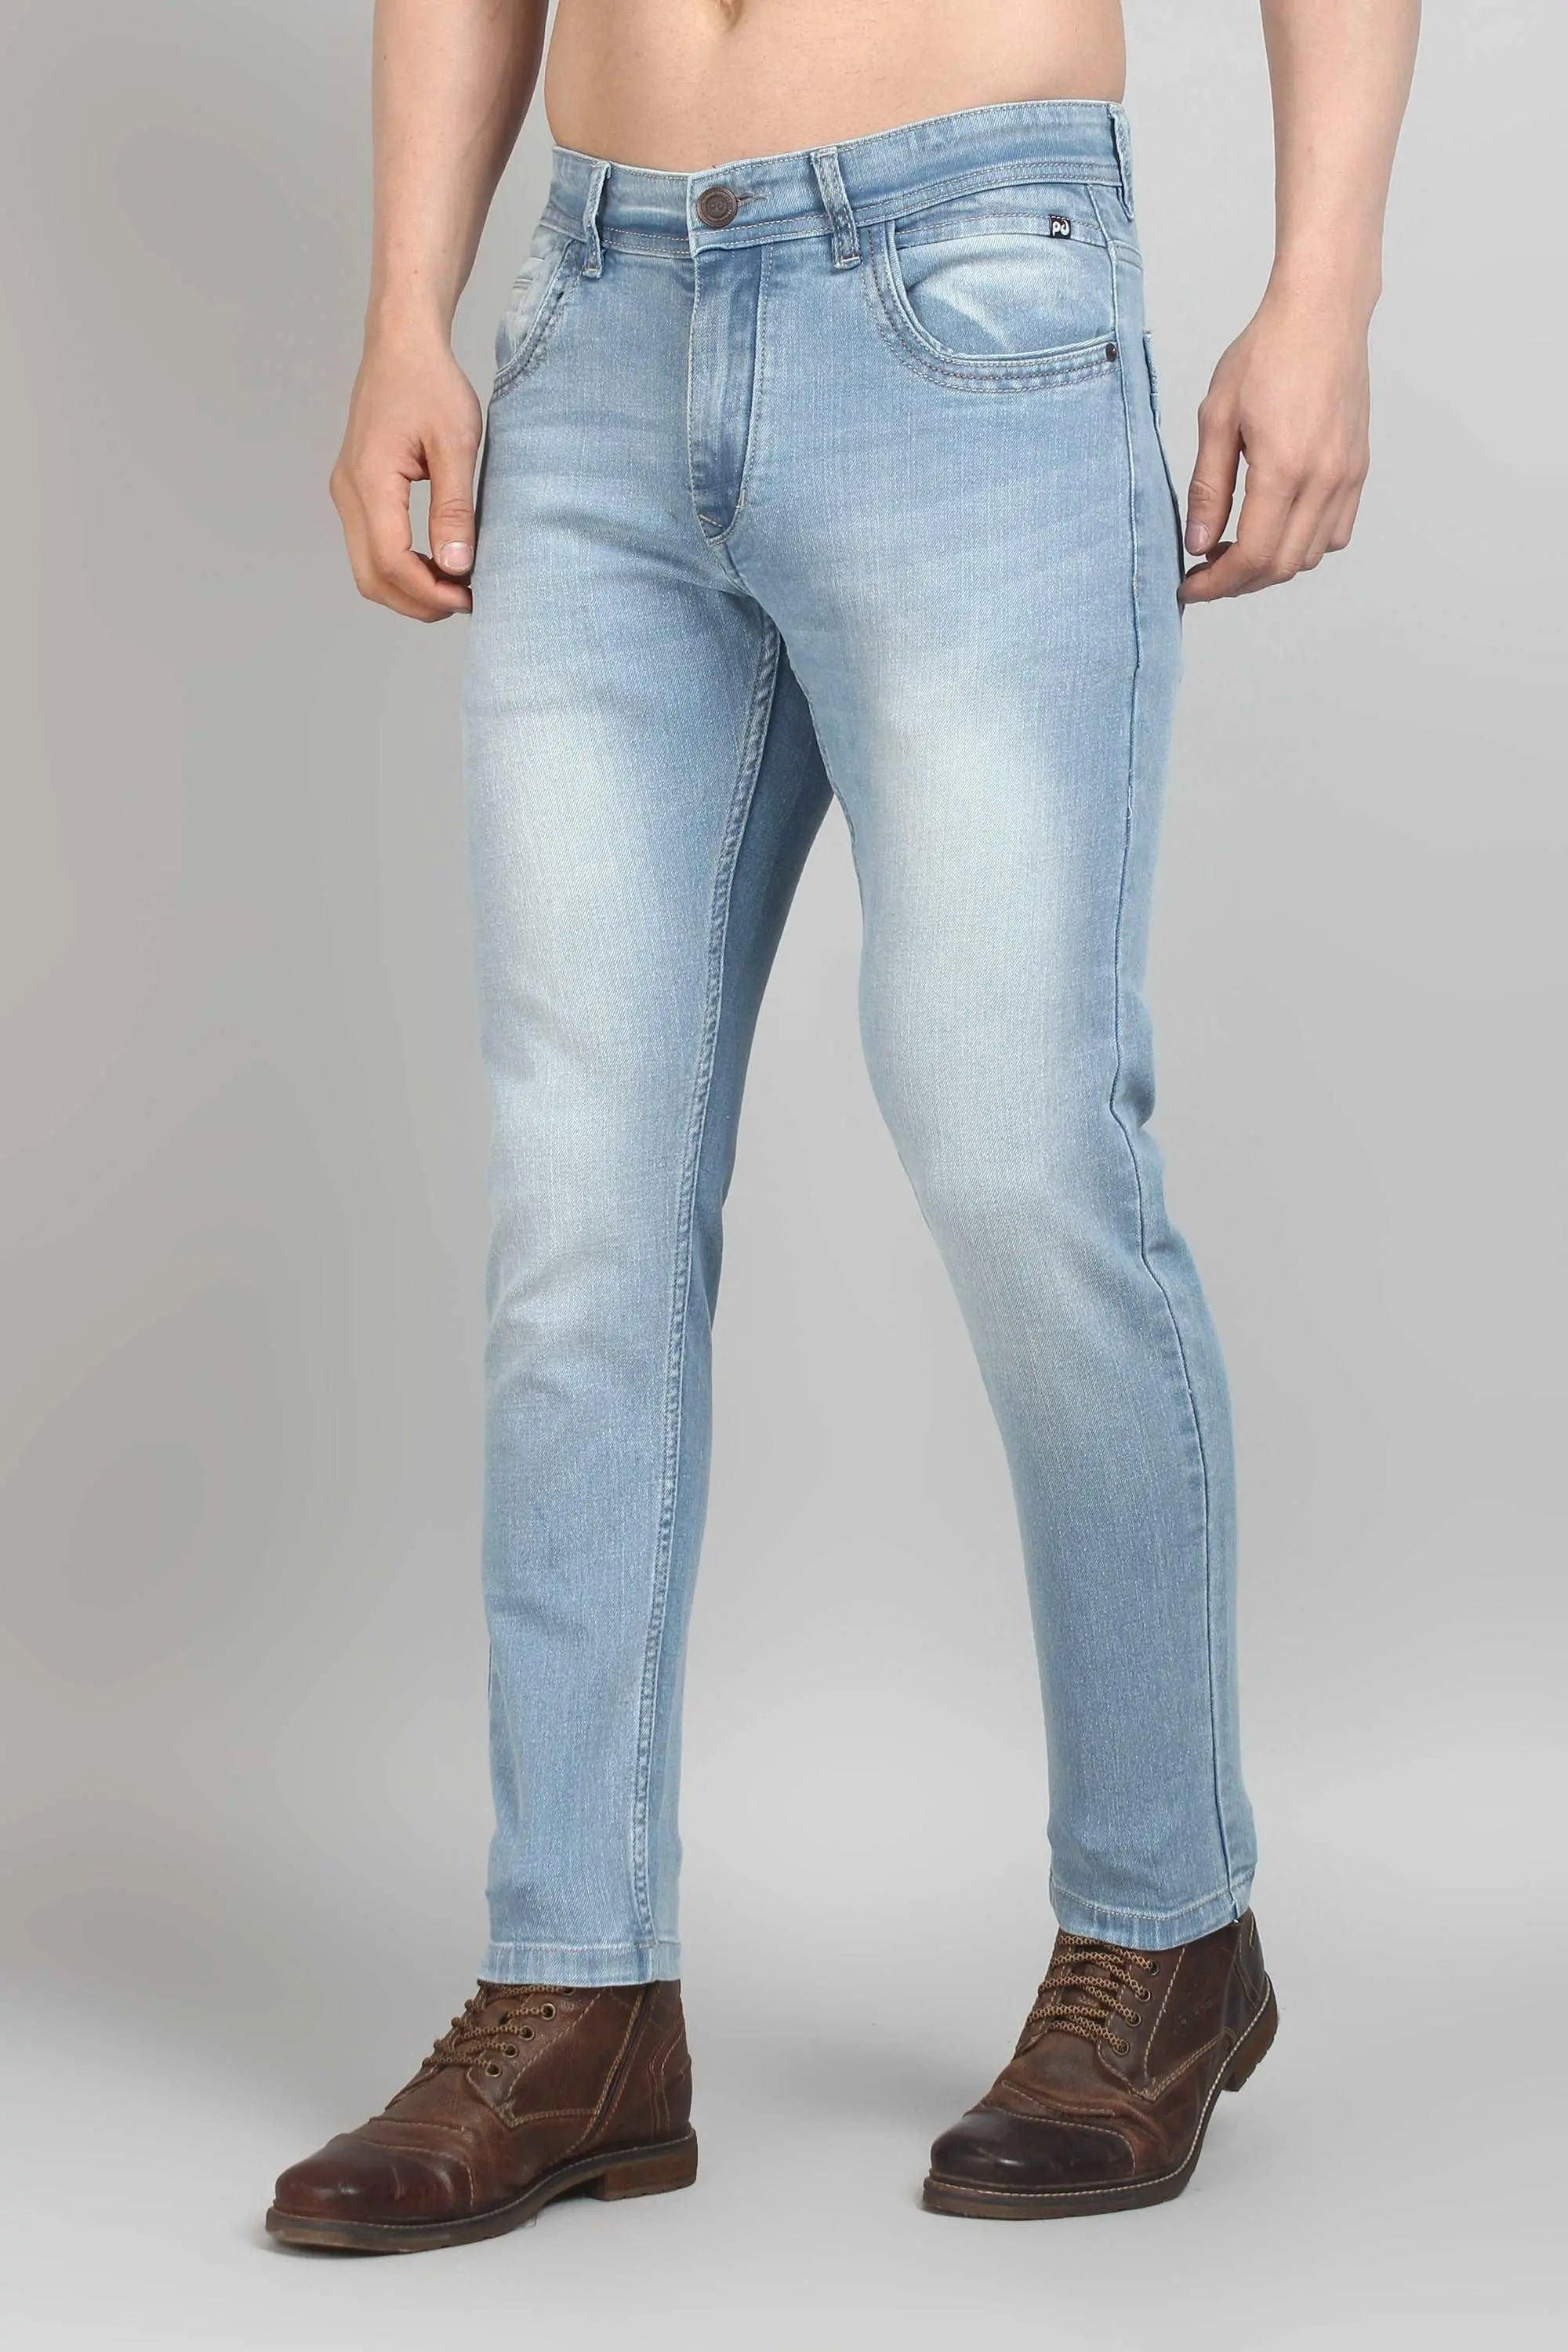 Light Blue Wash Straight Leg Jeans | Light blue jeans outfit, Straight leg  jeans outfits, Comfy jeans outfit